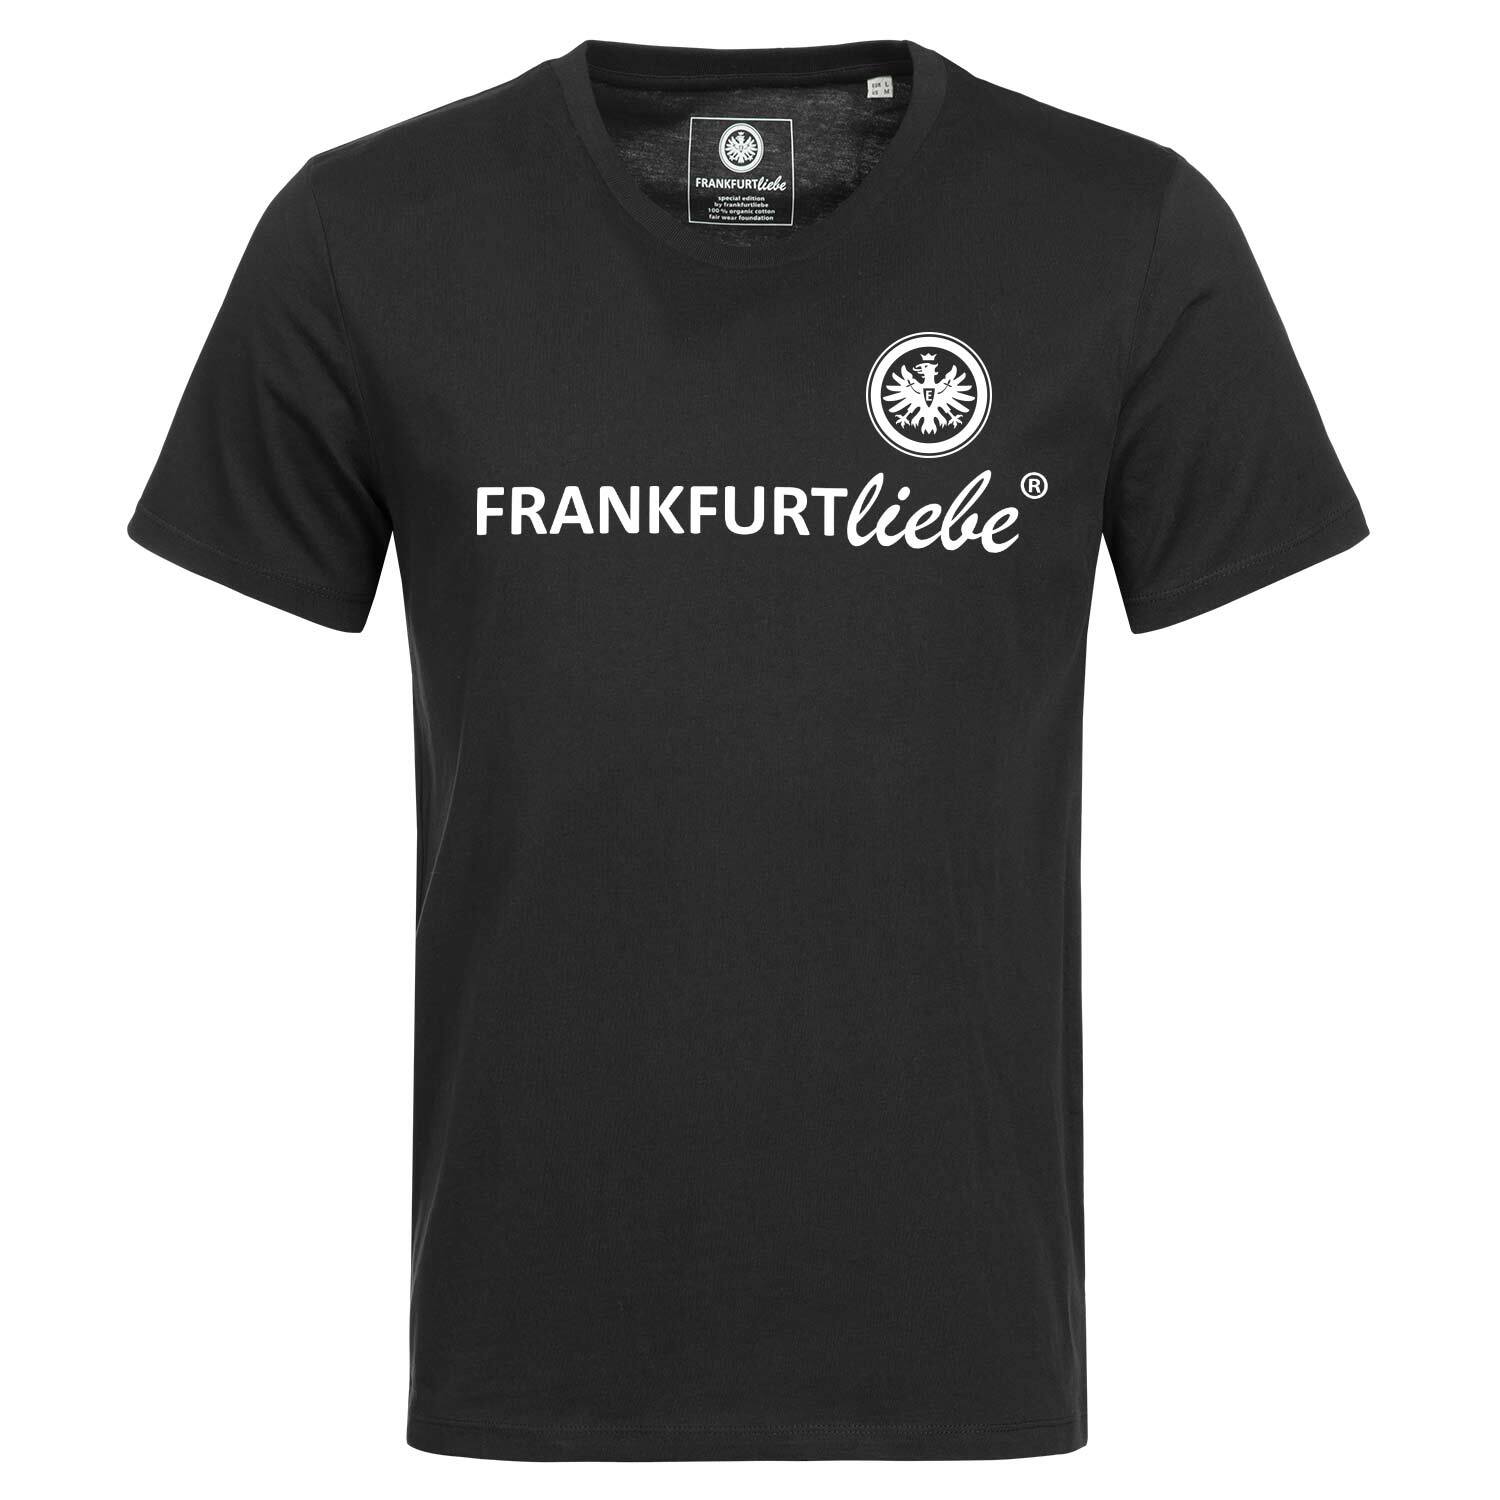 Bild 1: T-Shirt Frankfurtliebe